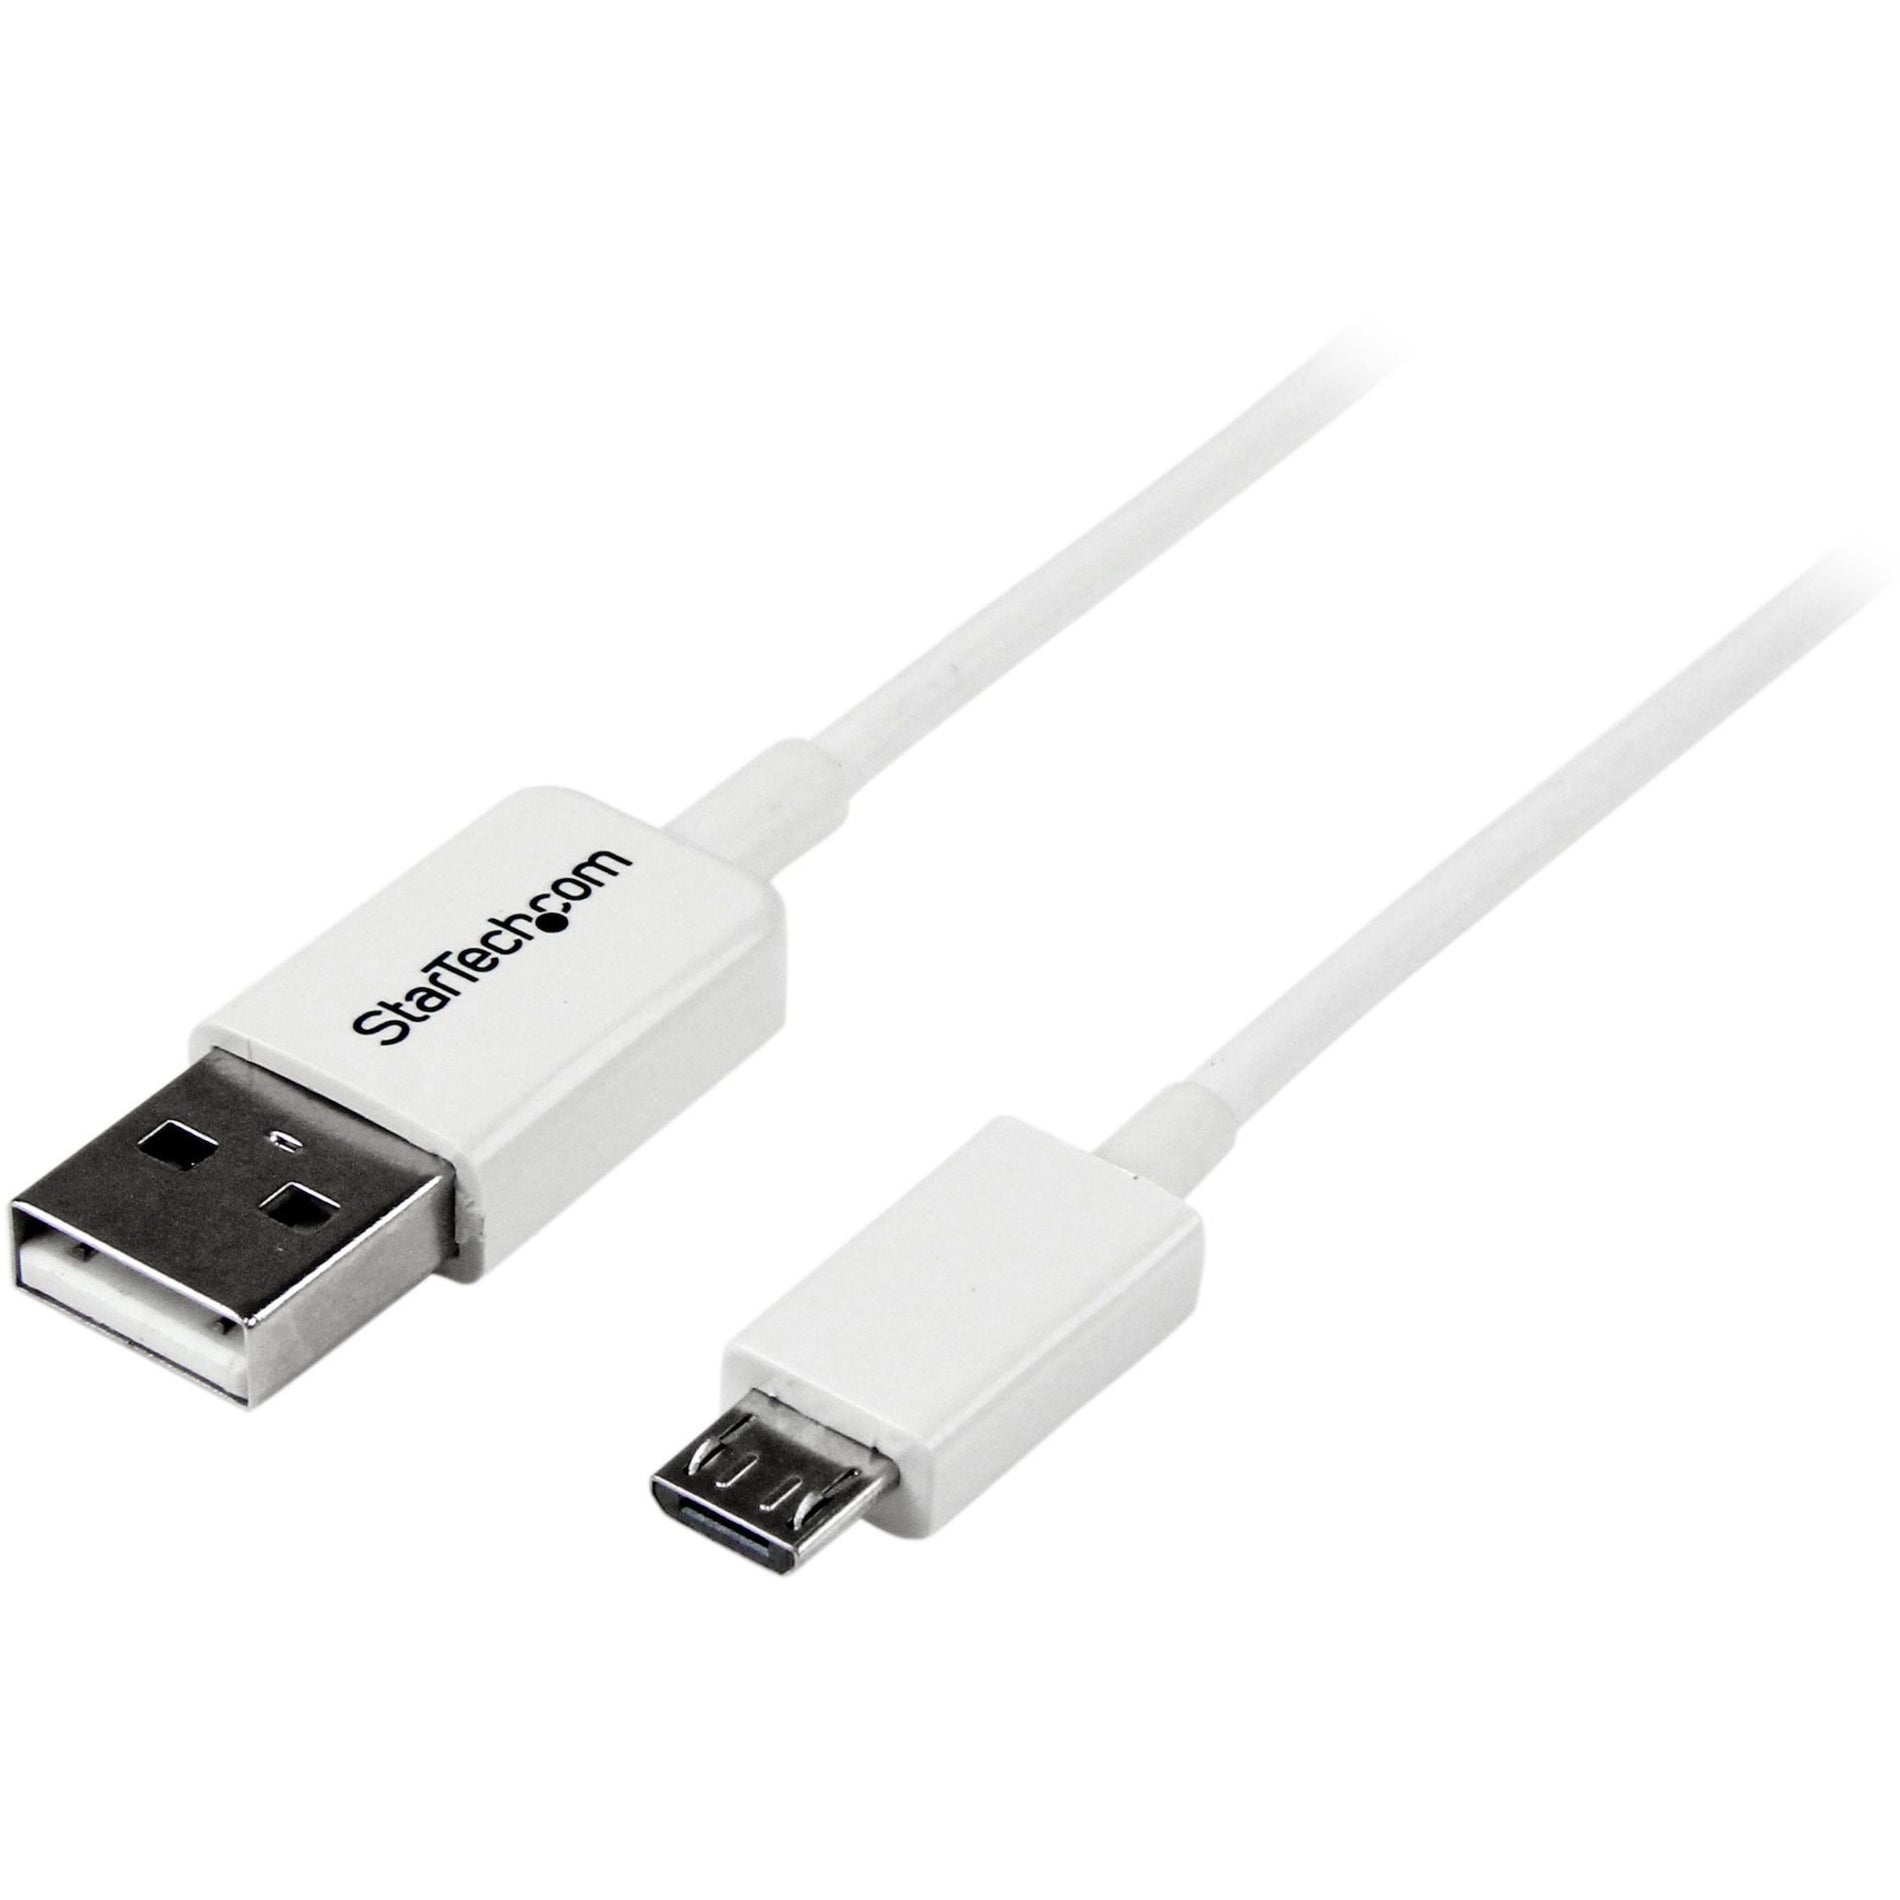 StarTech.com Cable USBPAUB50CMW Blanco de 0.5m Micro USB - A a Micro B Moldeado Alivio de Tensión Velocidad de Transferencia de Datos de 480 Mbit/s